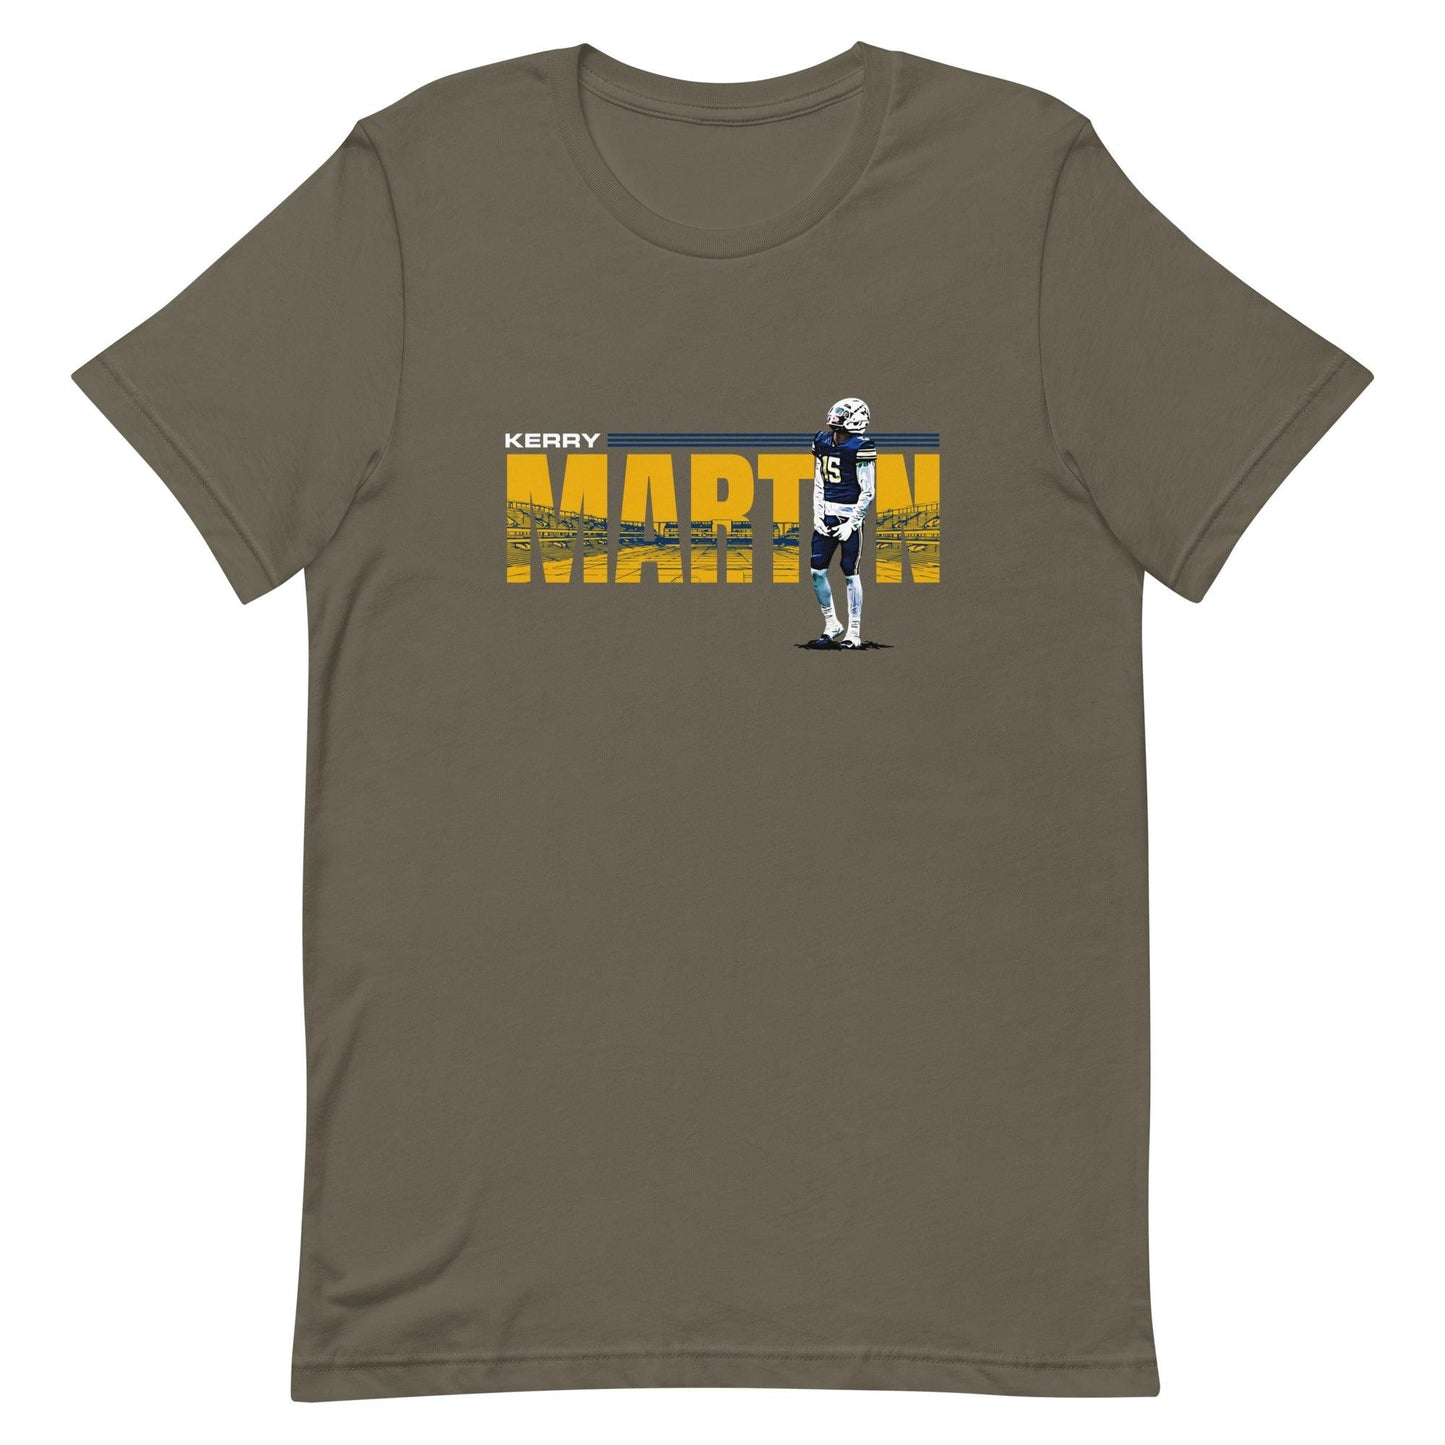 Kerry Martin "Gameday" t-shirt - Fan Arch